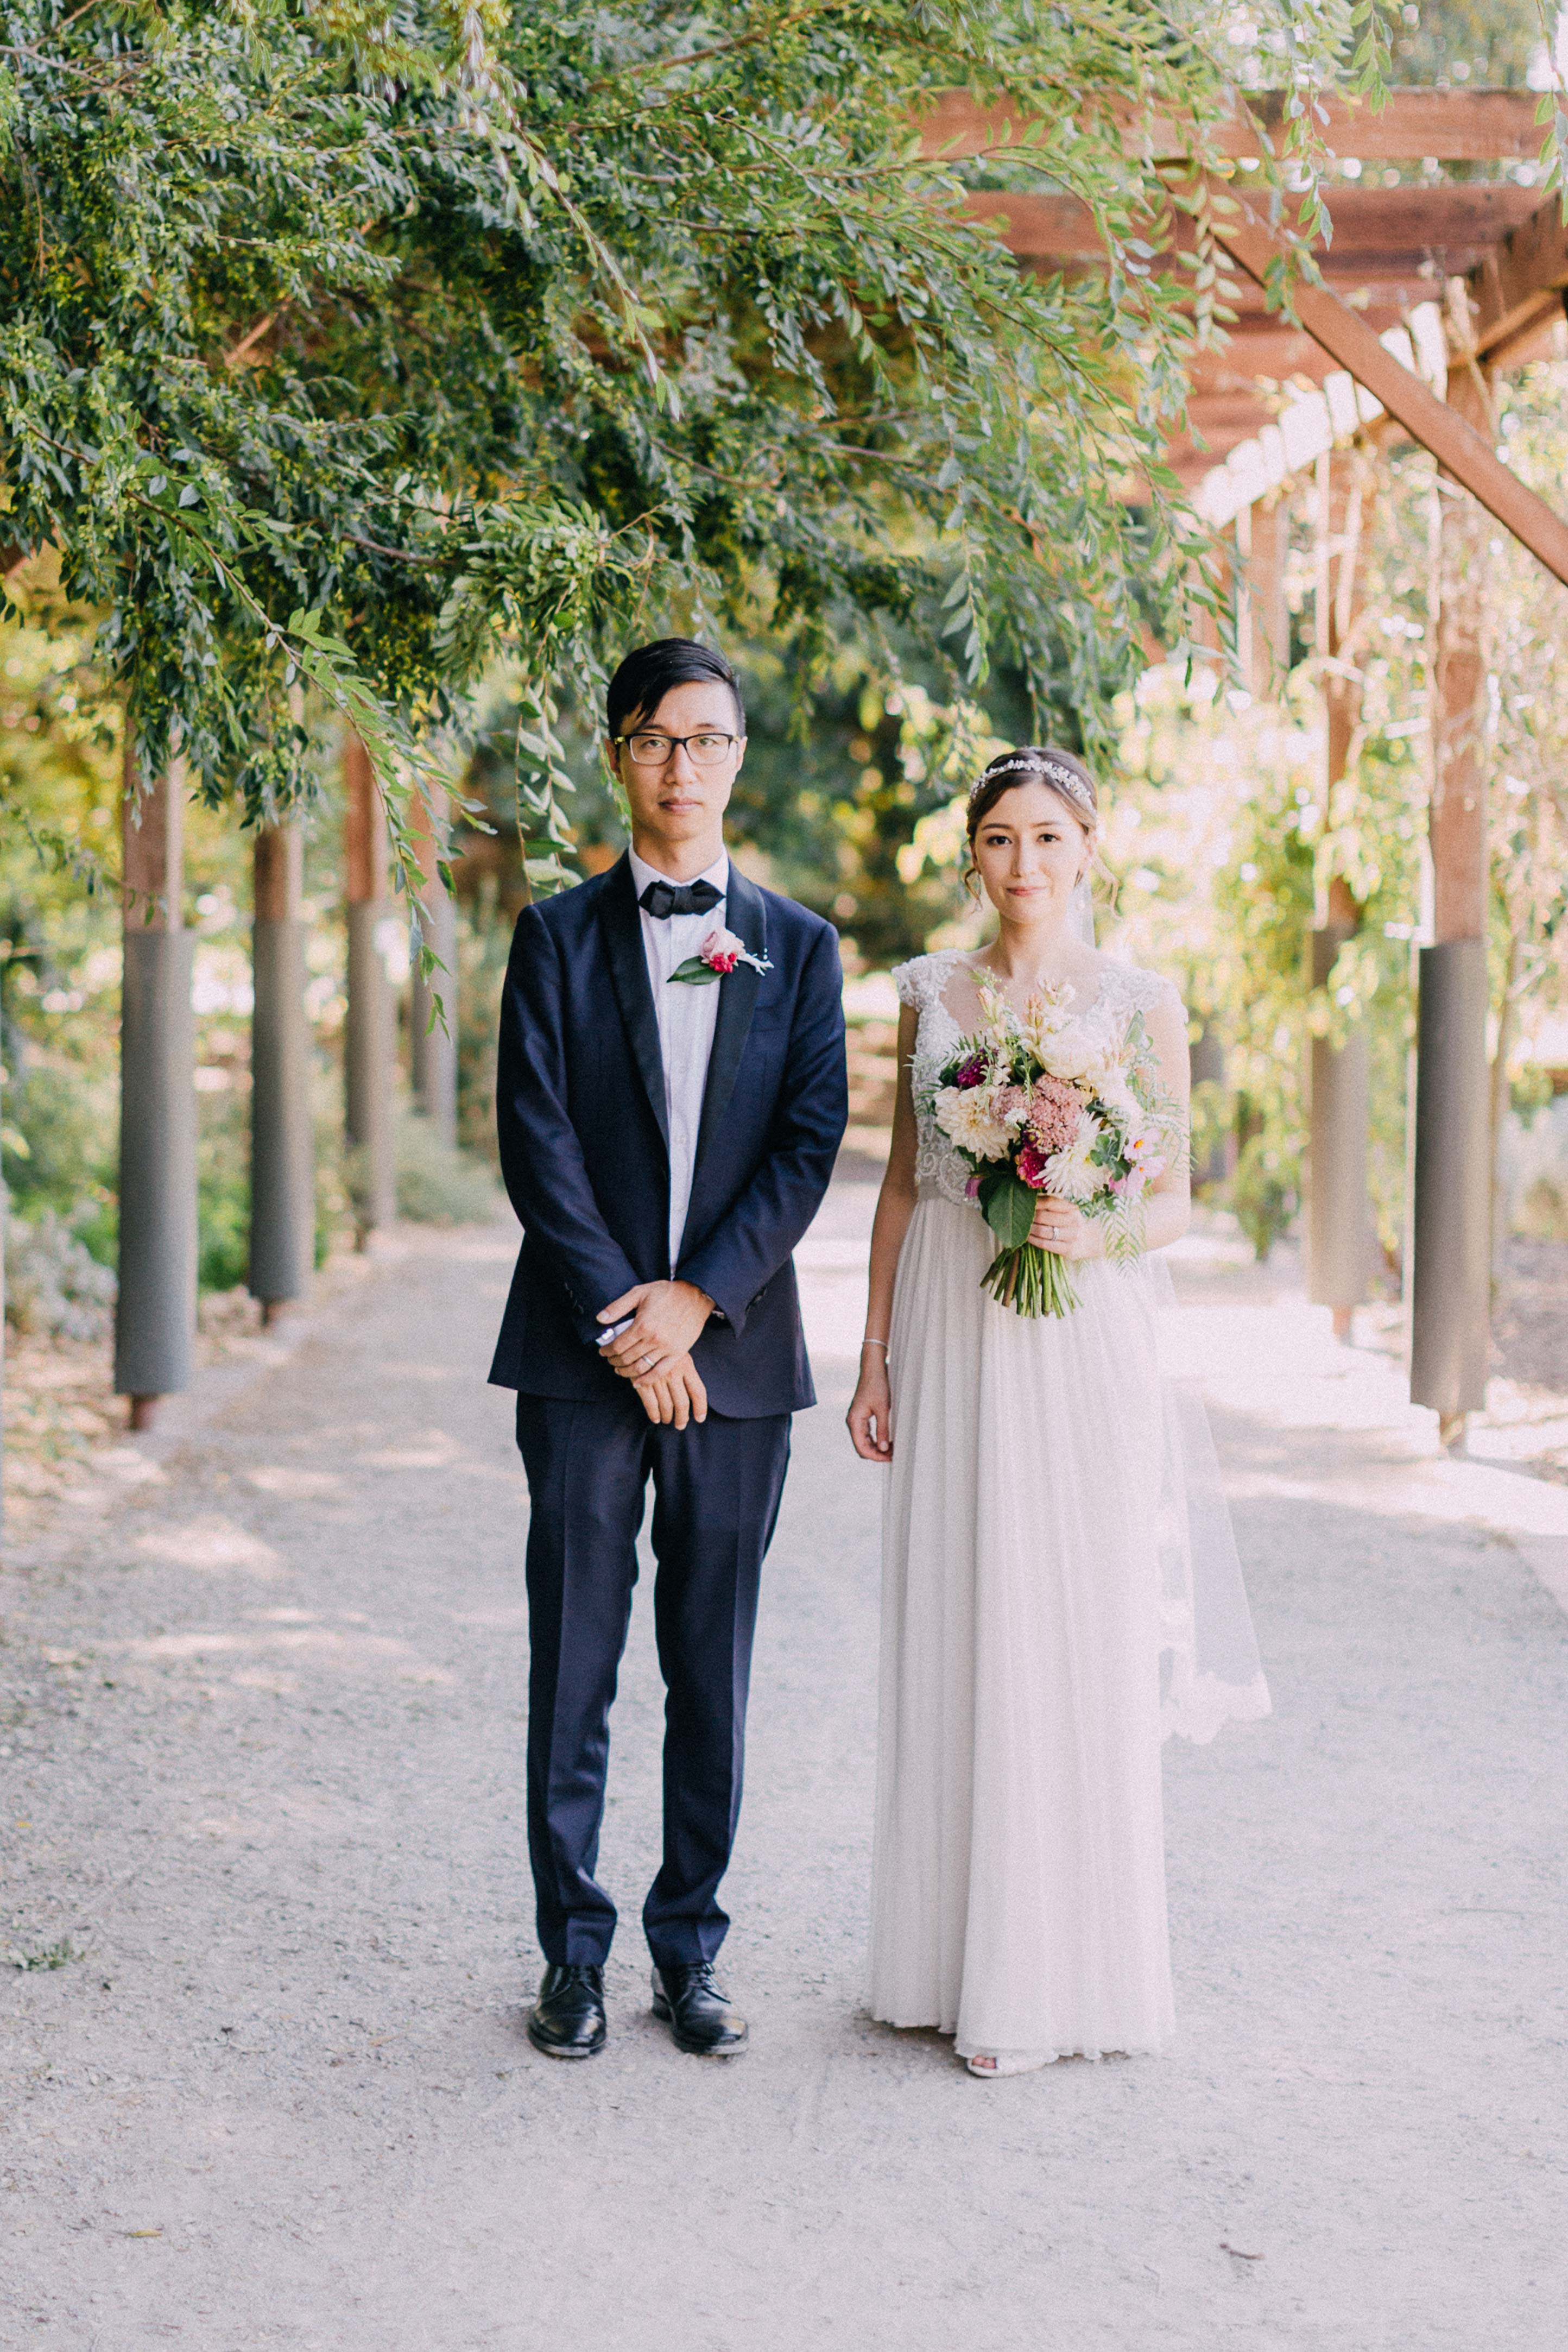 Melbourne-st-kilda-botanical-garden-wedding-photographer-portrait-formal